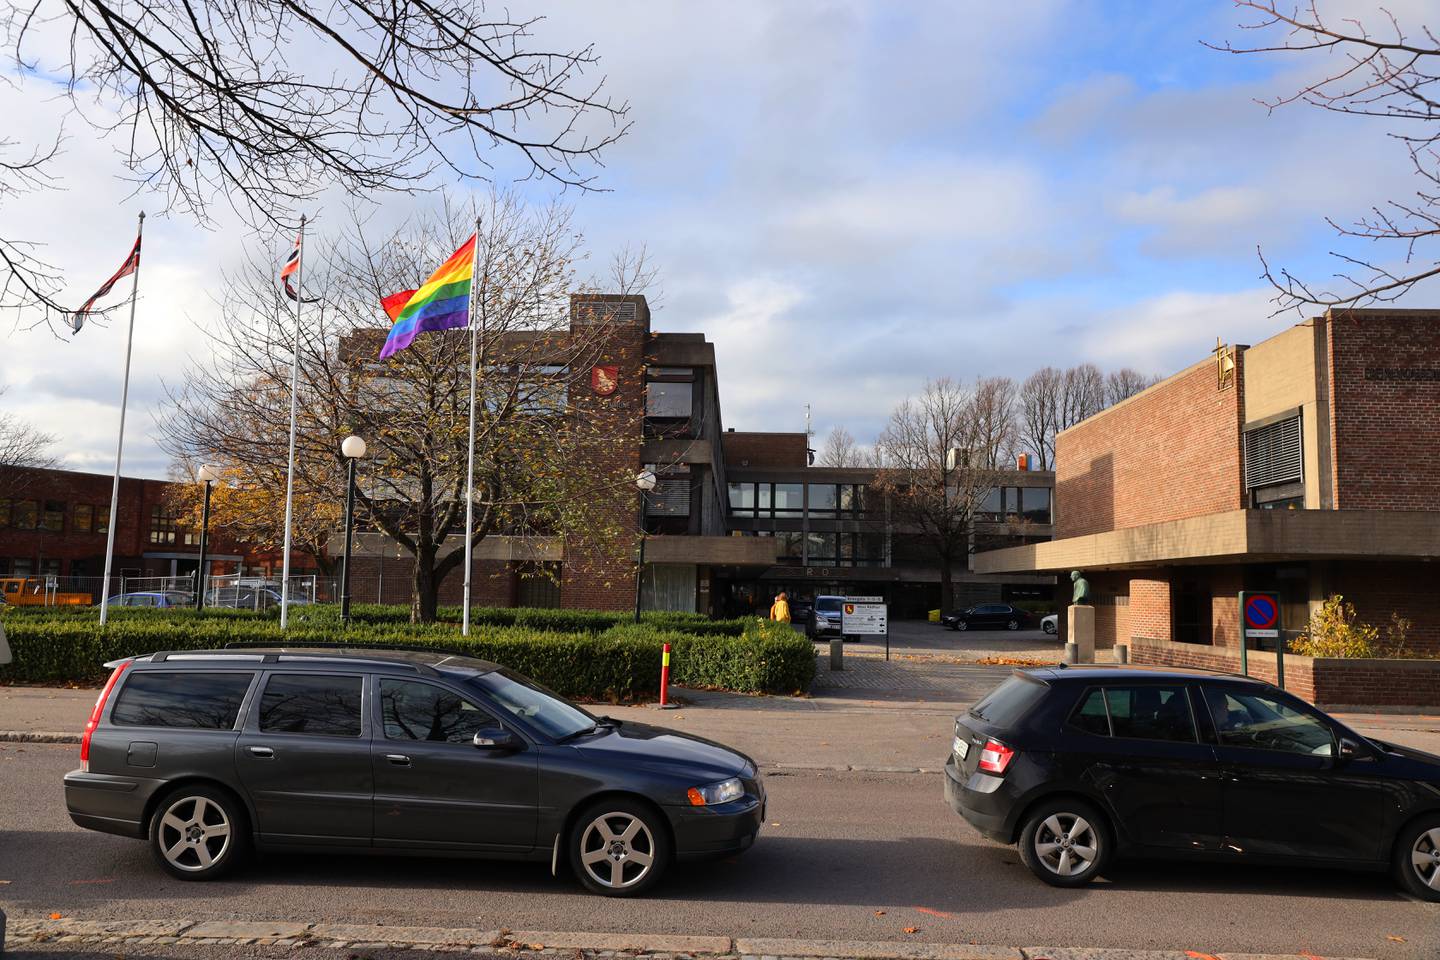 Moss kommune har flere ganger heist regnbueflagget foran rådhuset. Her fra 27. oktober 2018, i forbindelse med at Den nordiske motstandsbevegelsen (DNM) holdt markering i byen.